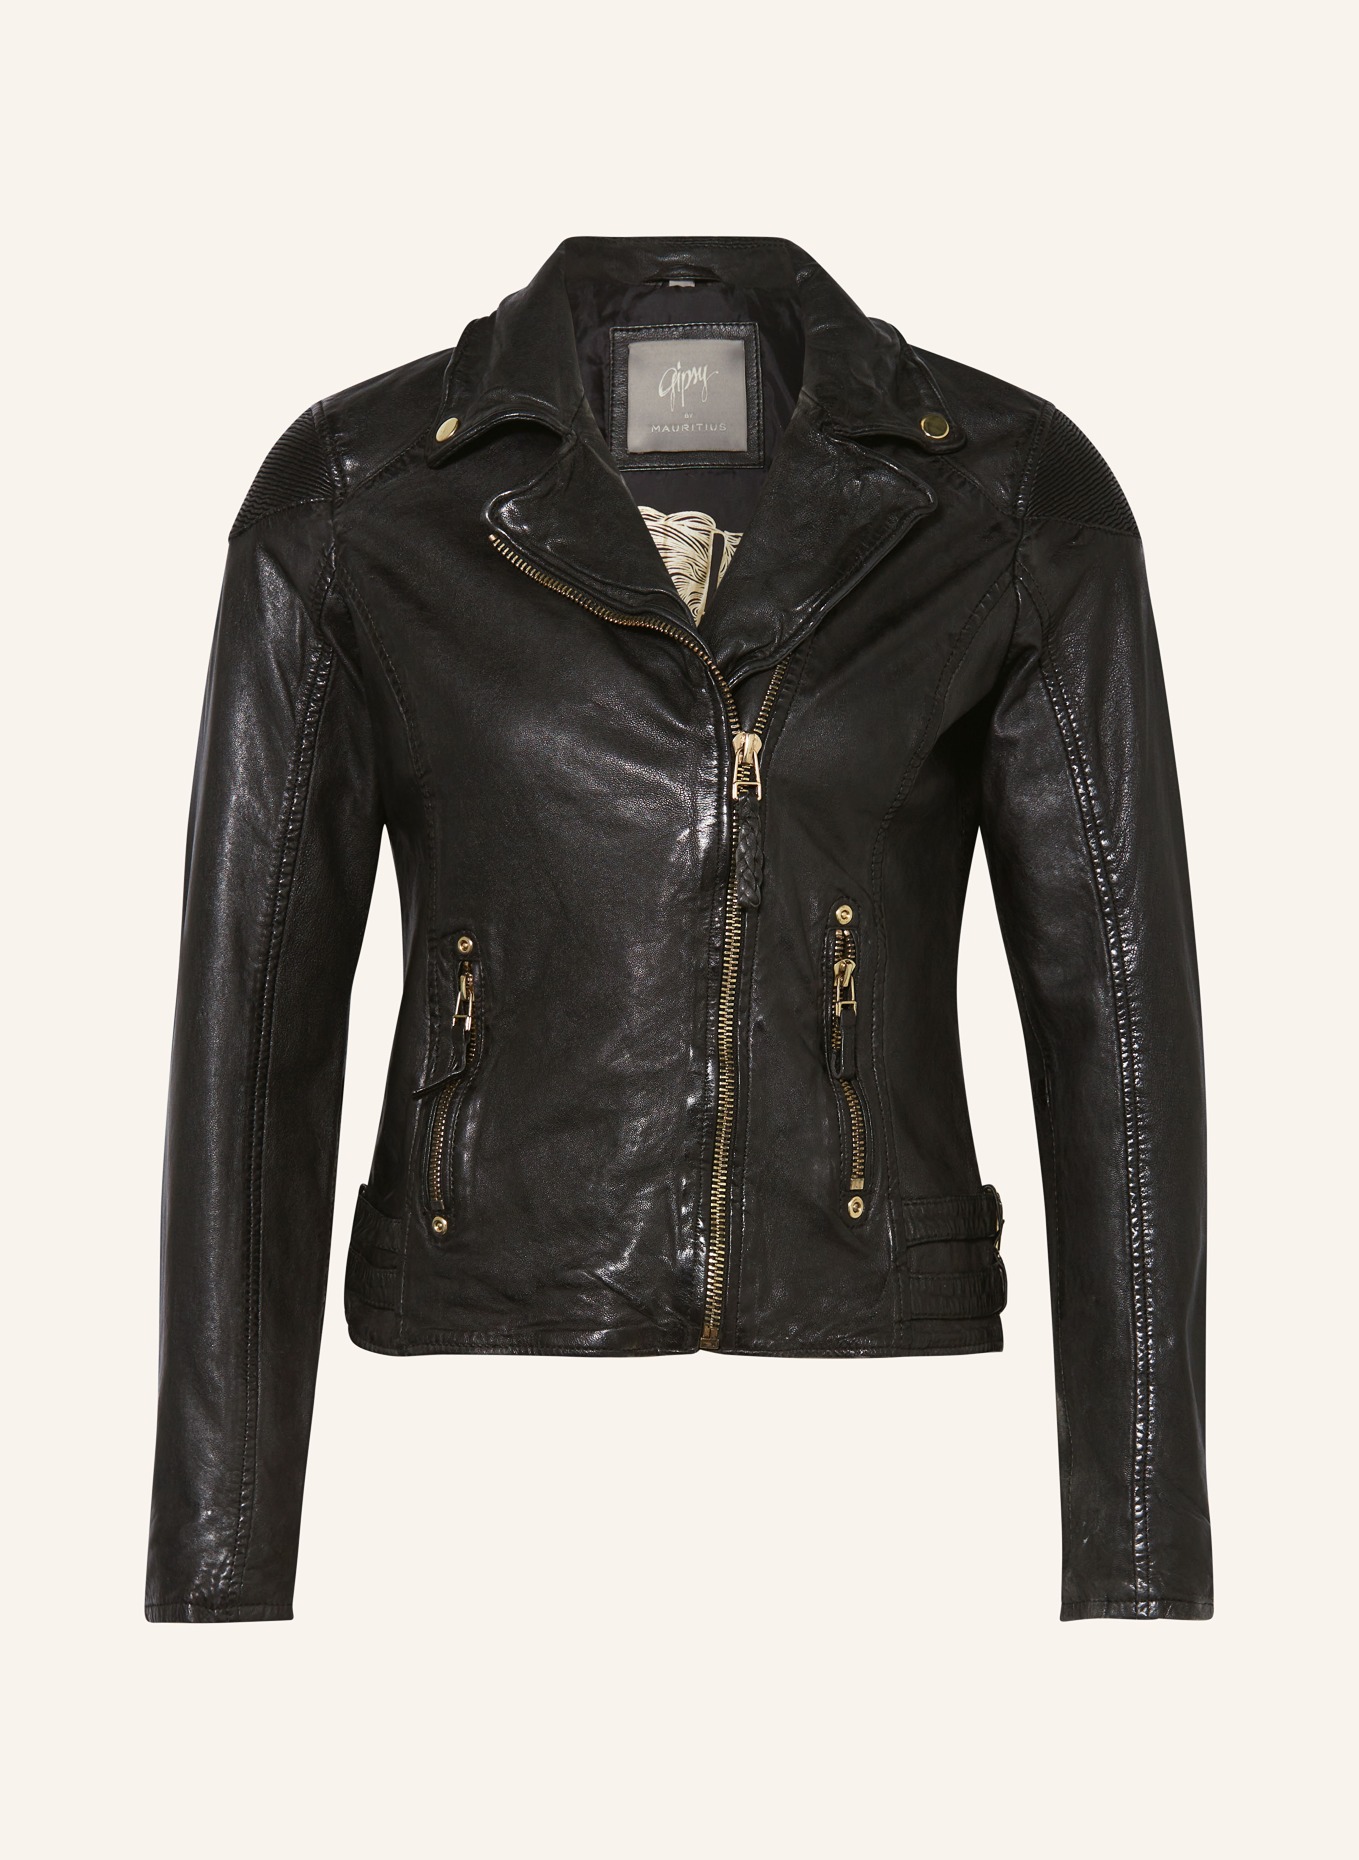 GWCADIZ gipsy jacket black Leather in